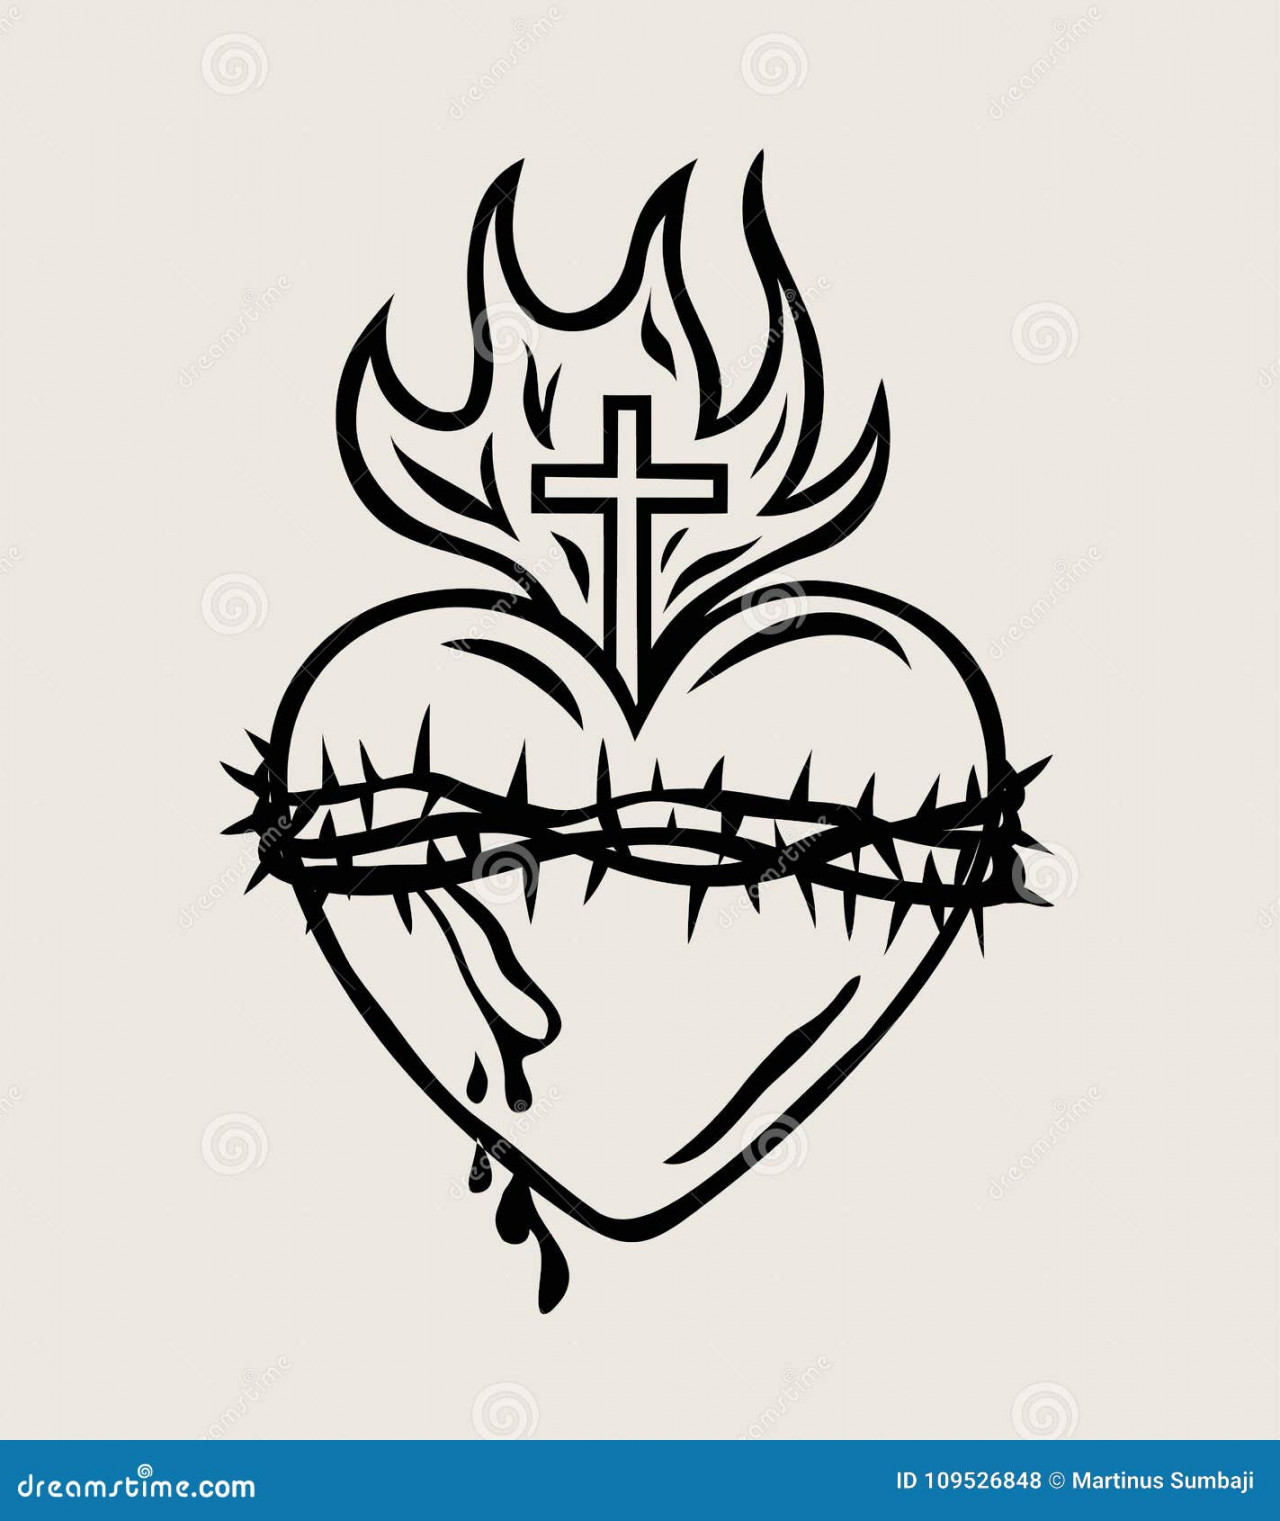 The Sacred Heart of Jesus Sketch, Vector Design Stock Vector